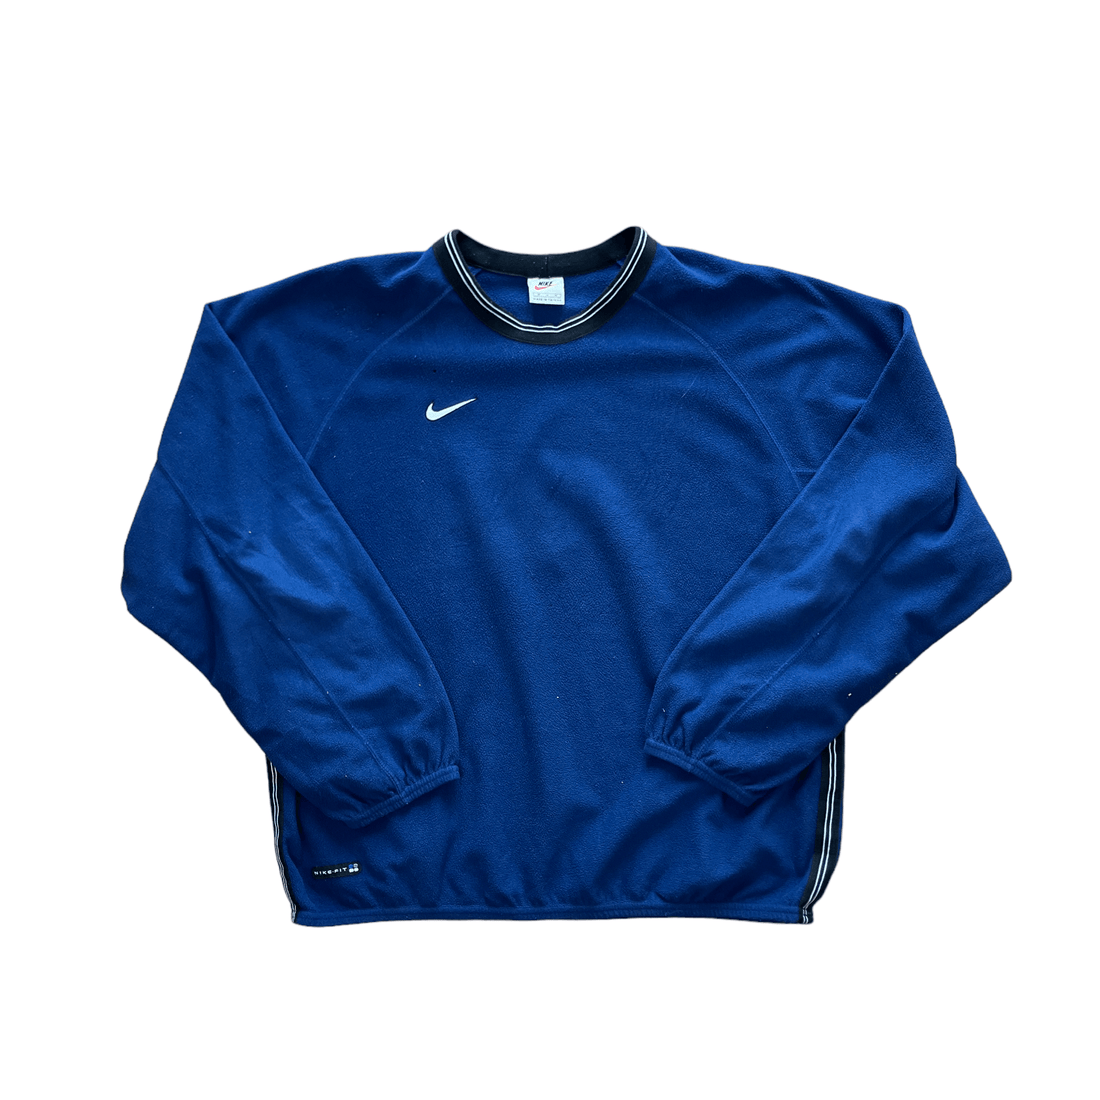 Vintage 90s Navy Blue Nike Fleece Sweatshirt - Medium - The Streetwear Studio